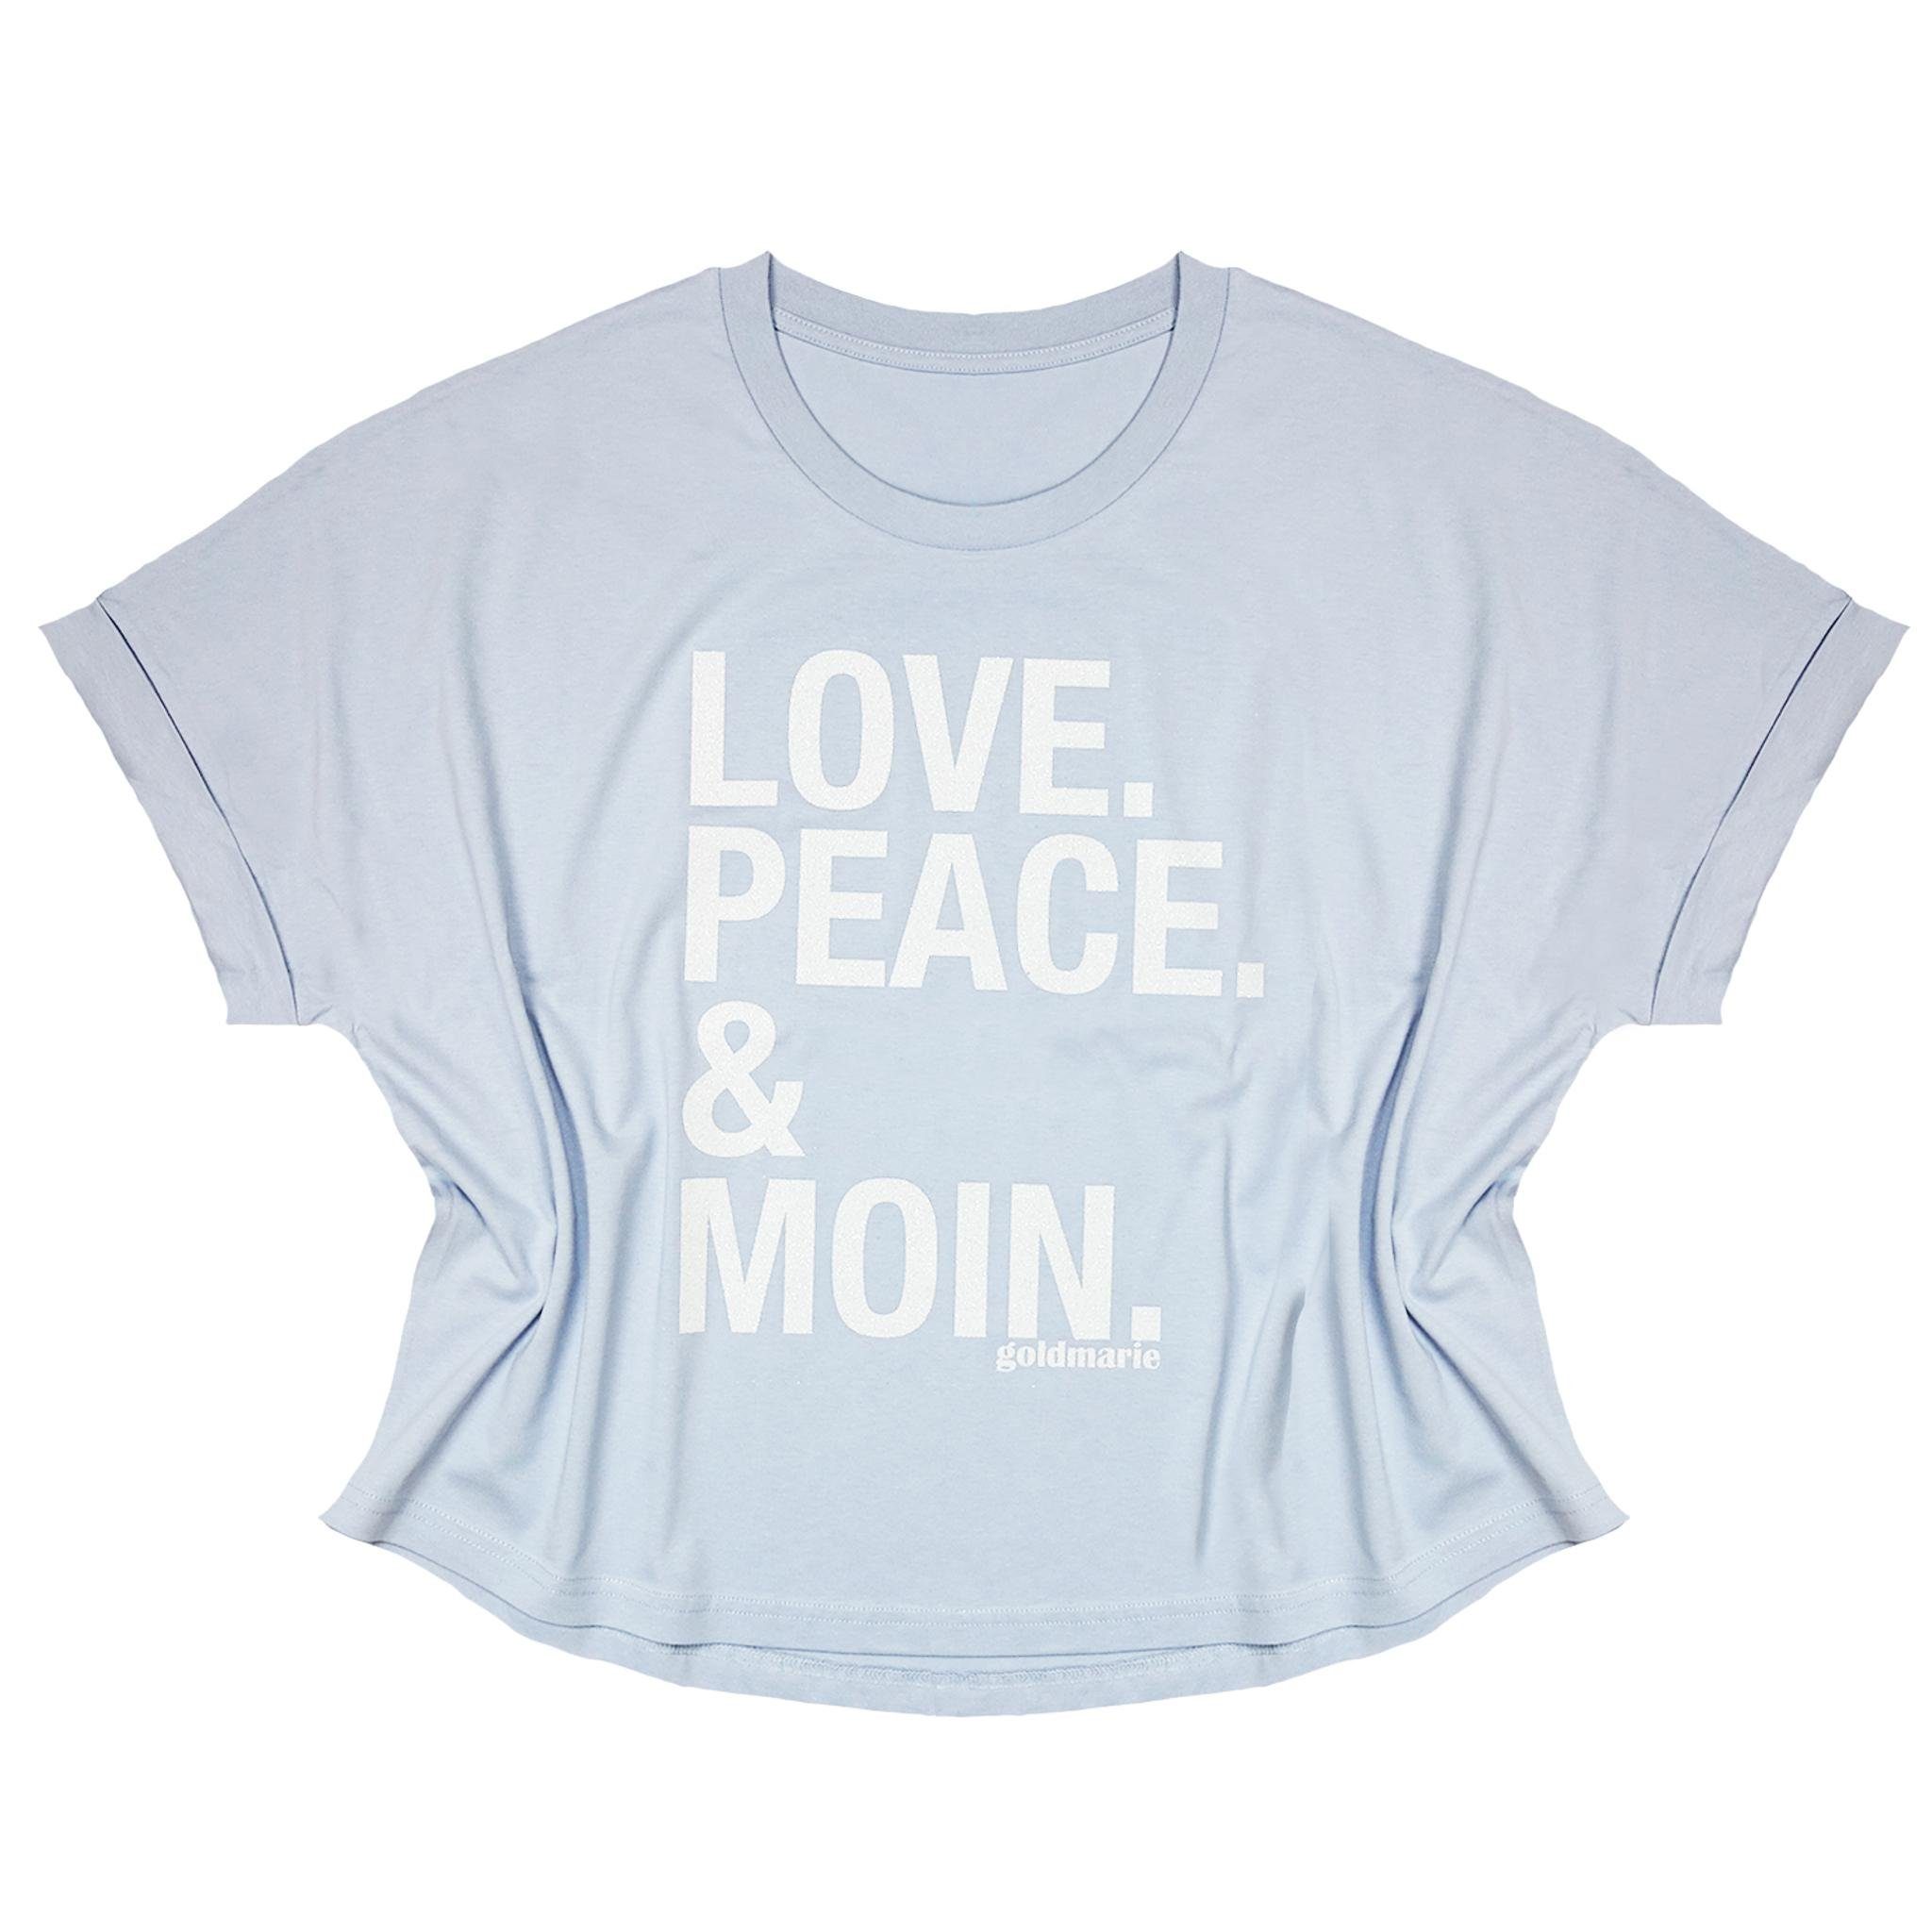 goldmarie T-Shirt LOVE Shirt mit eisblau Uschi Glitzer MOIN Baumwolle PEACE